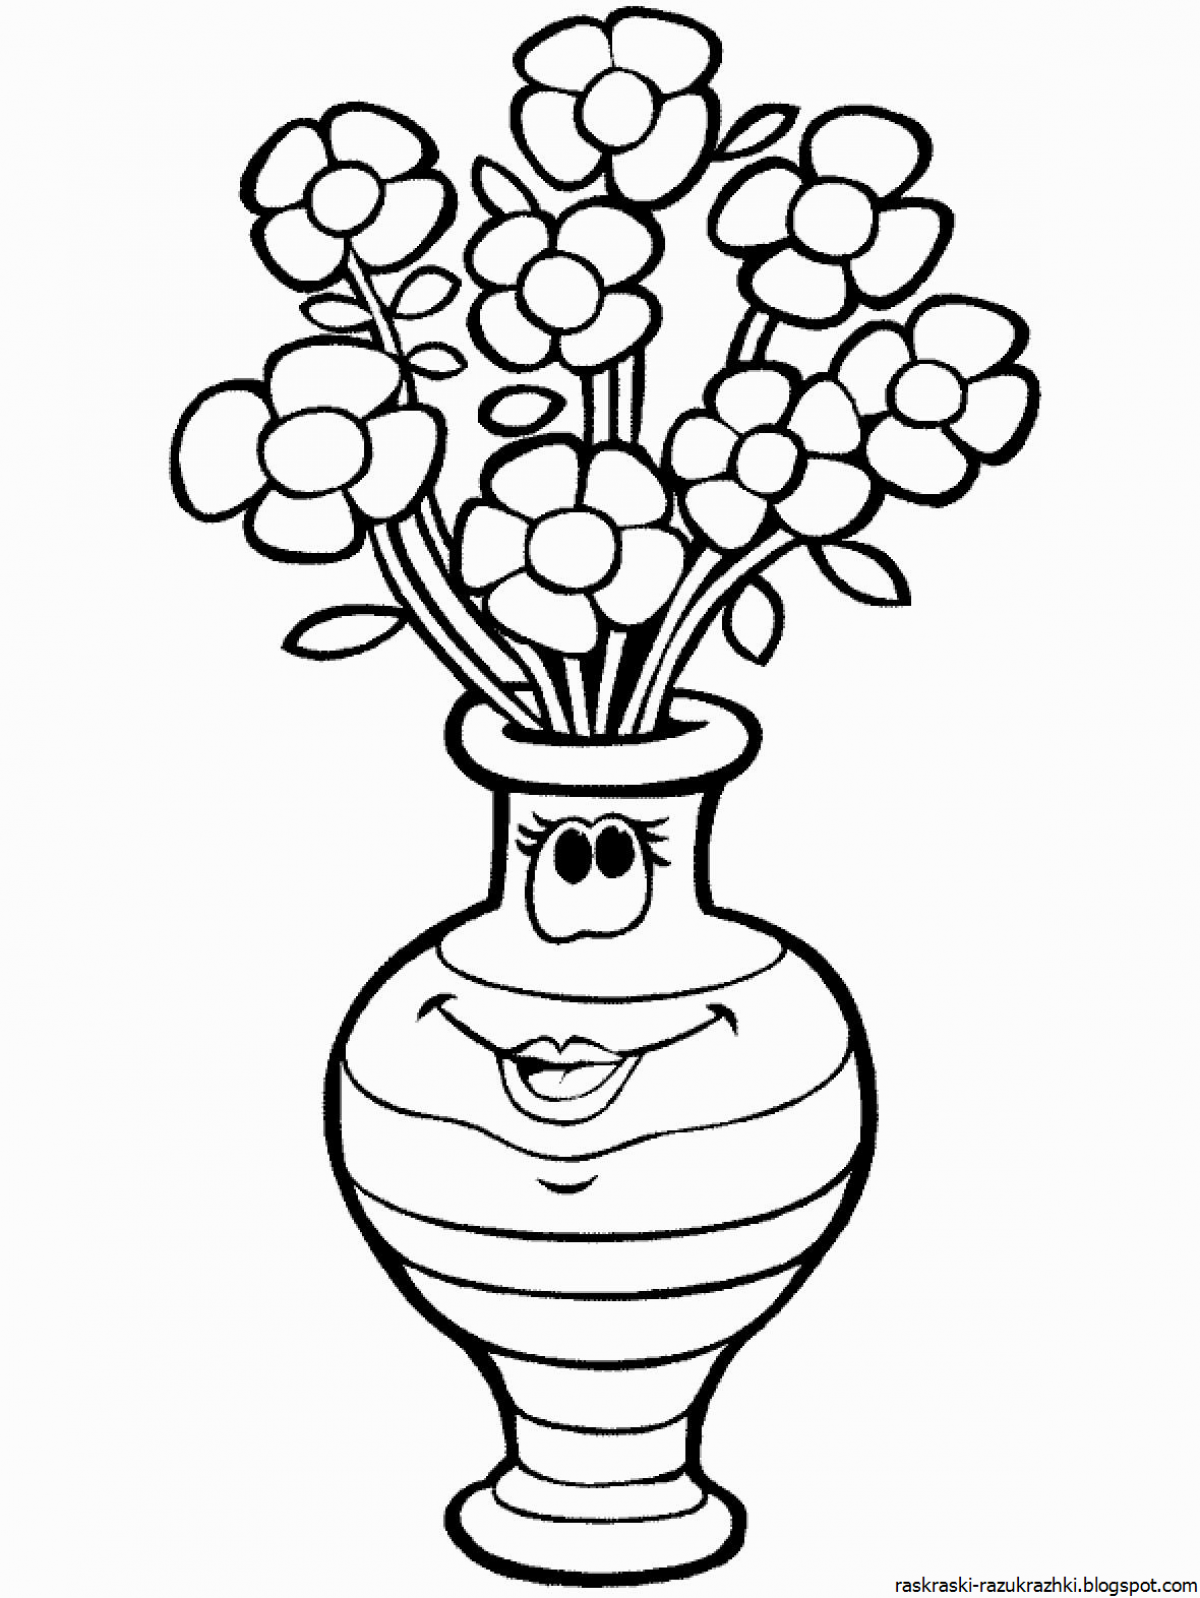 Dazzling flower vase for children 8-9 years old